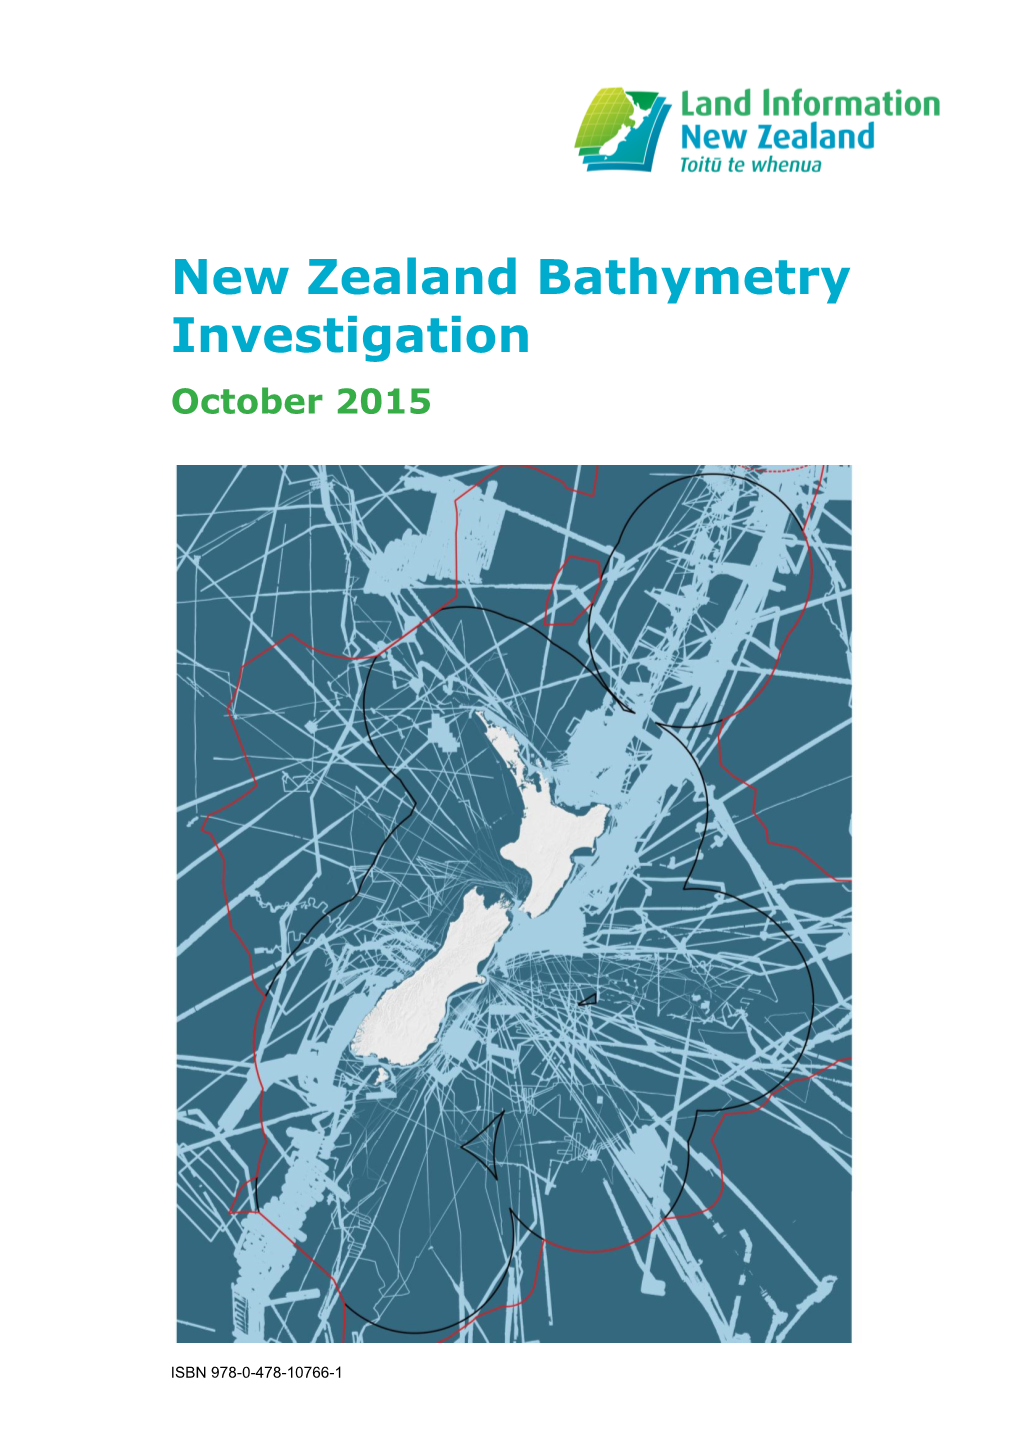 New Zealand Bathymetry Investigation Report